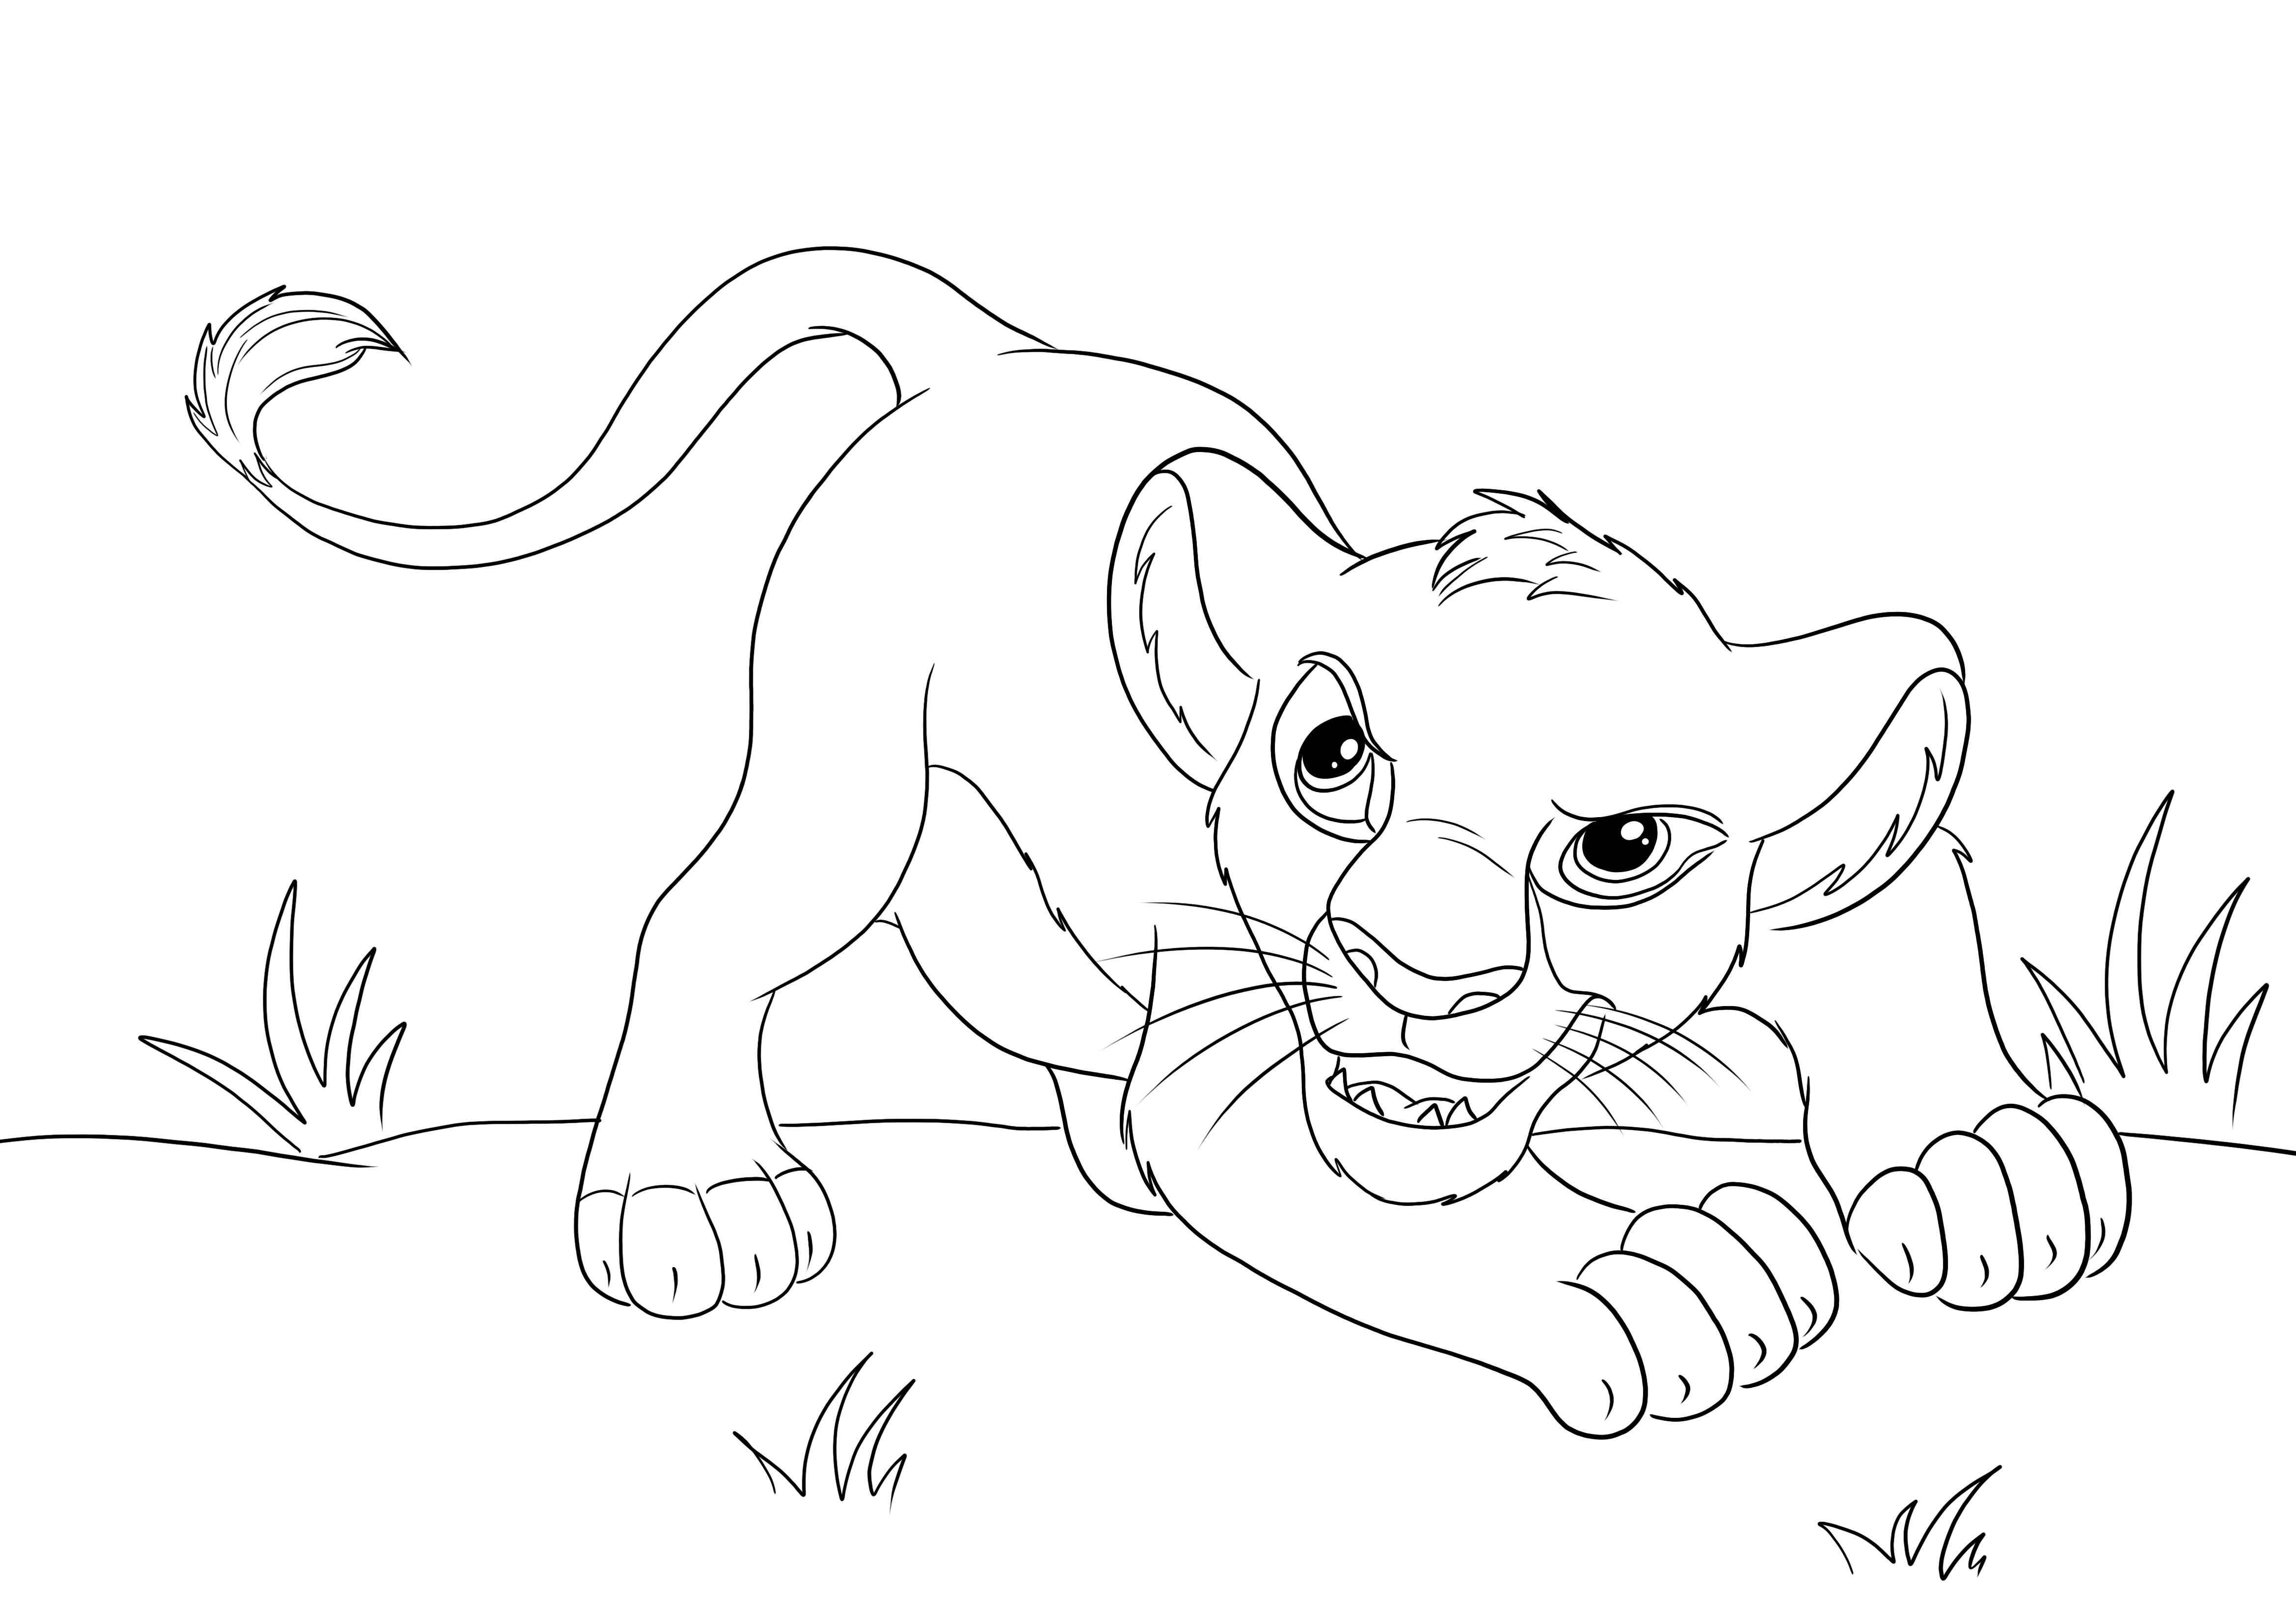 Aquí está Simba defendiéndose a sí mismo imagen para colorear fácil de colorear e imprimir gratis